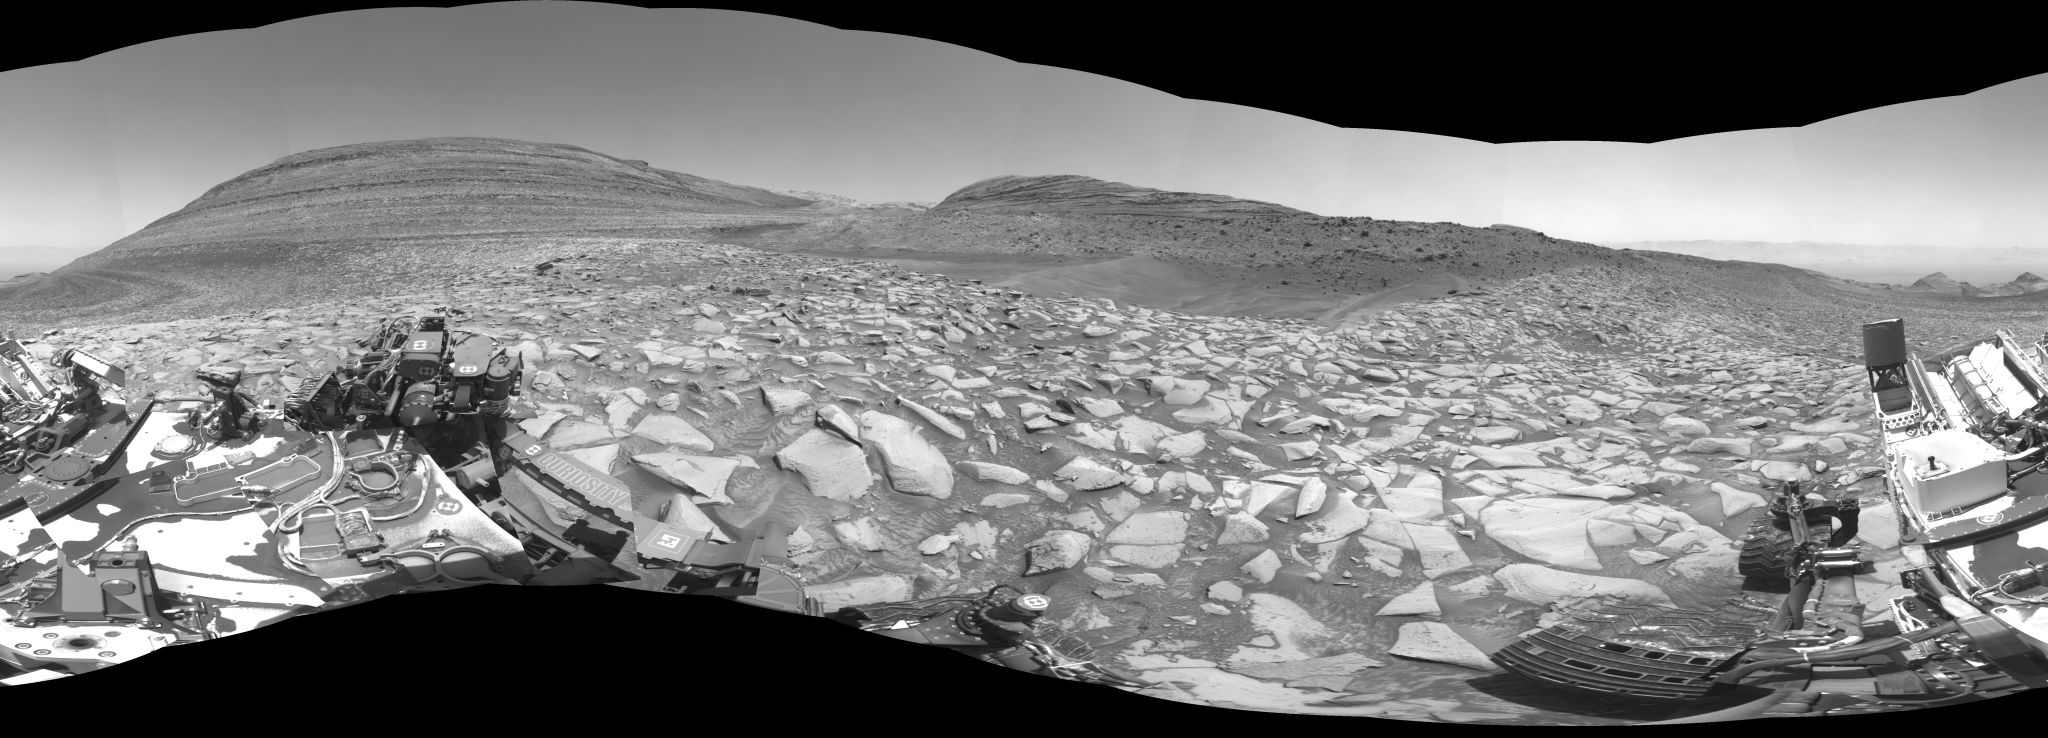 NASA's Curiosity Mars rover captured this 360-degree panorama